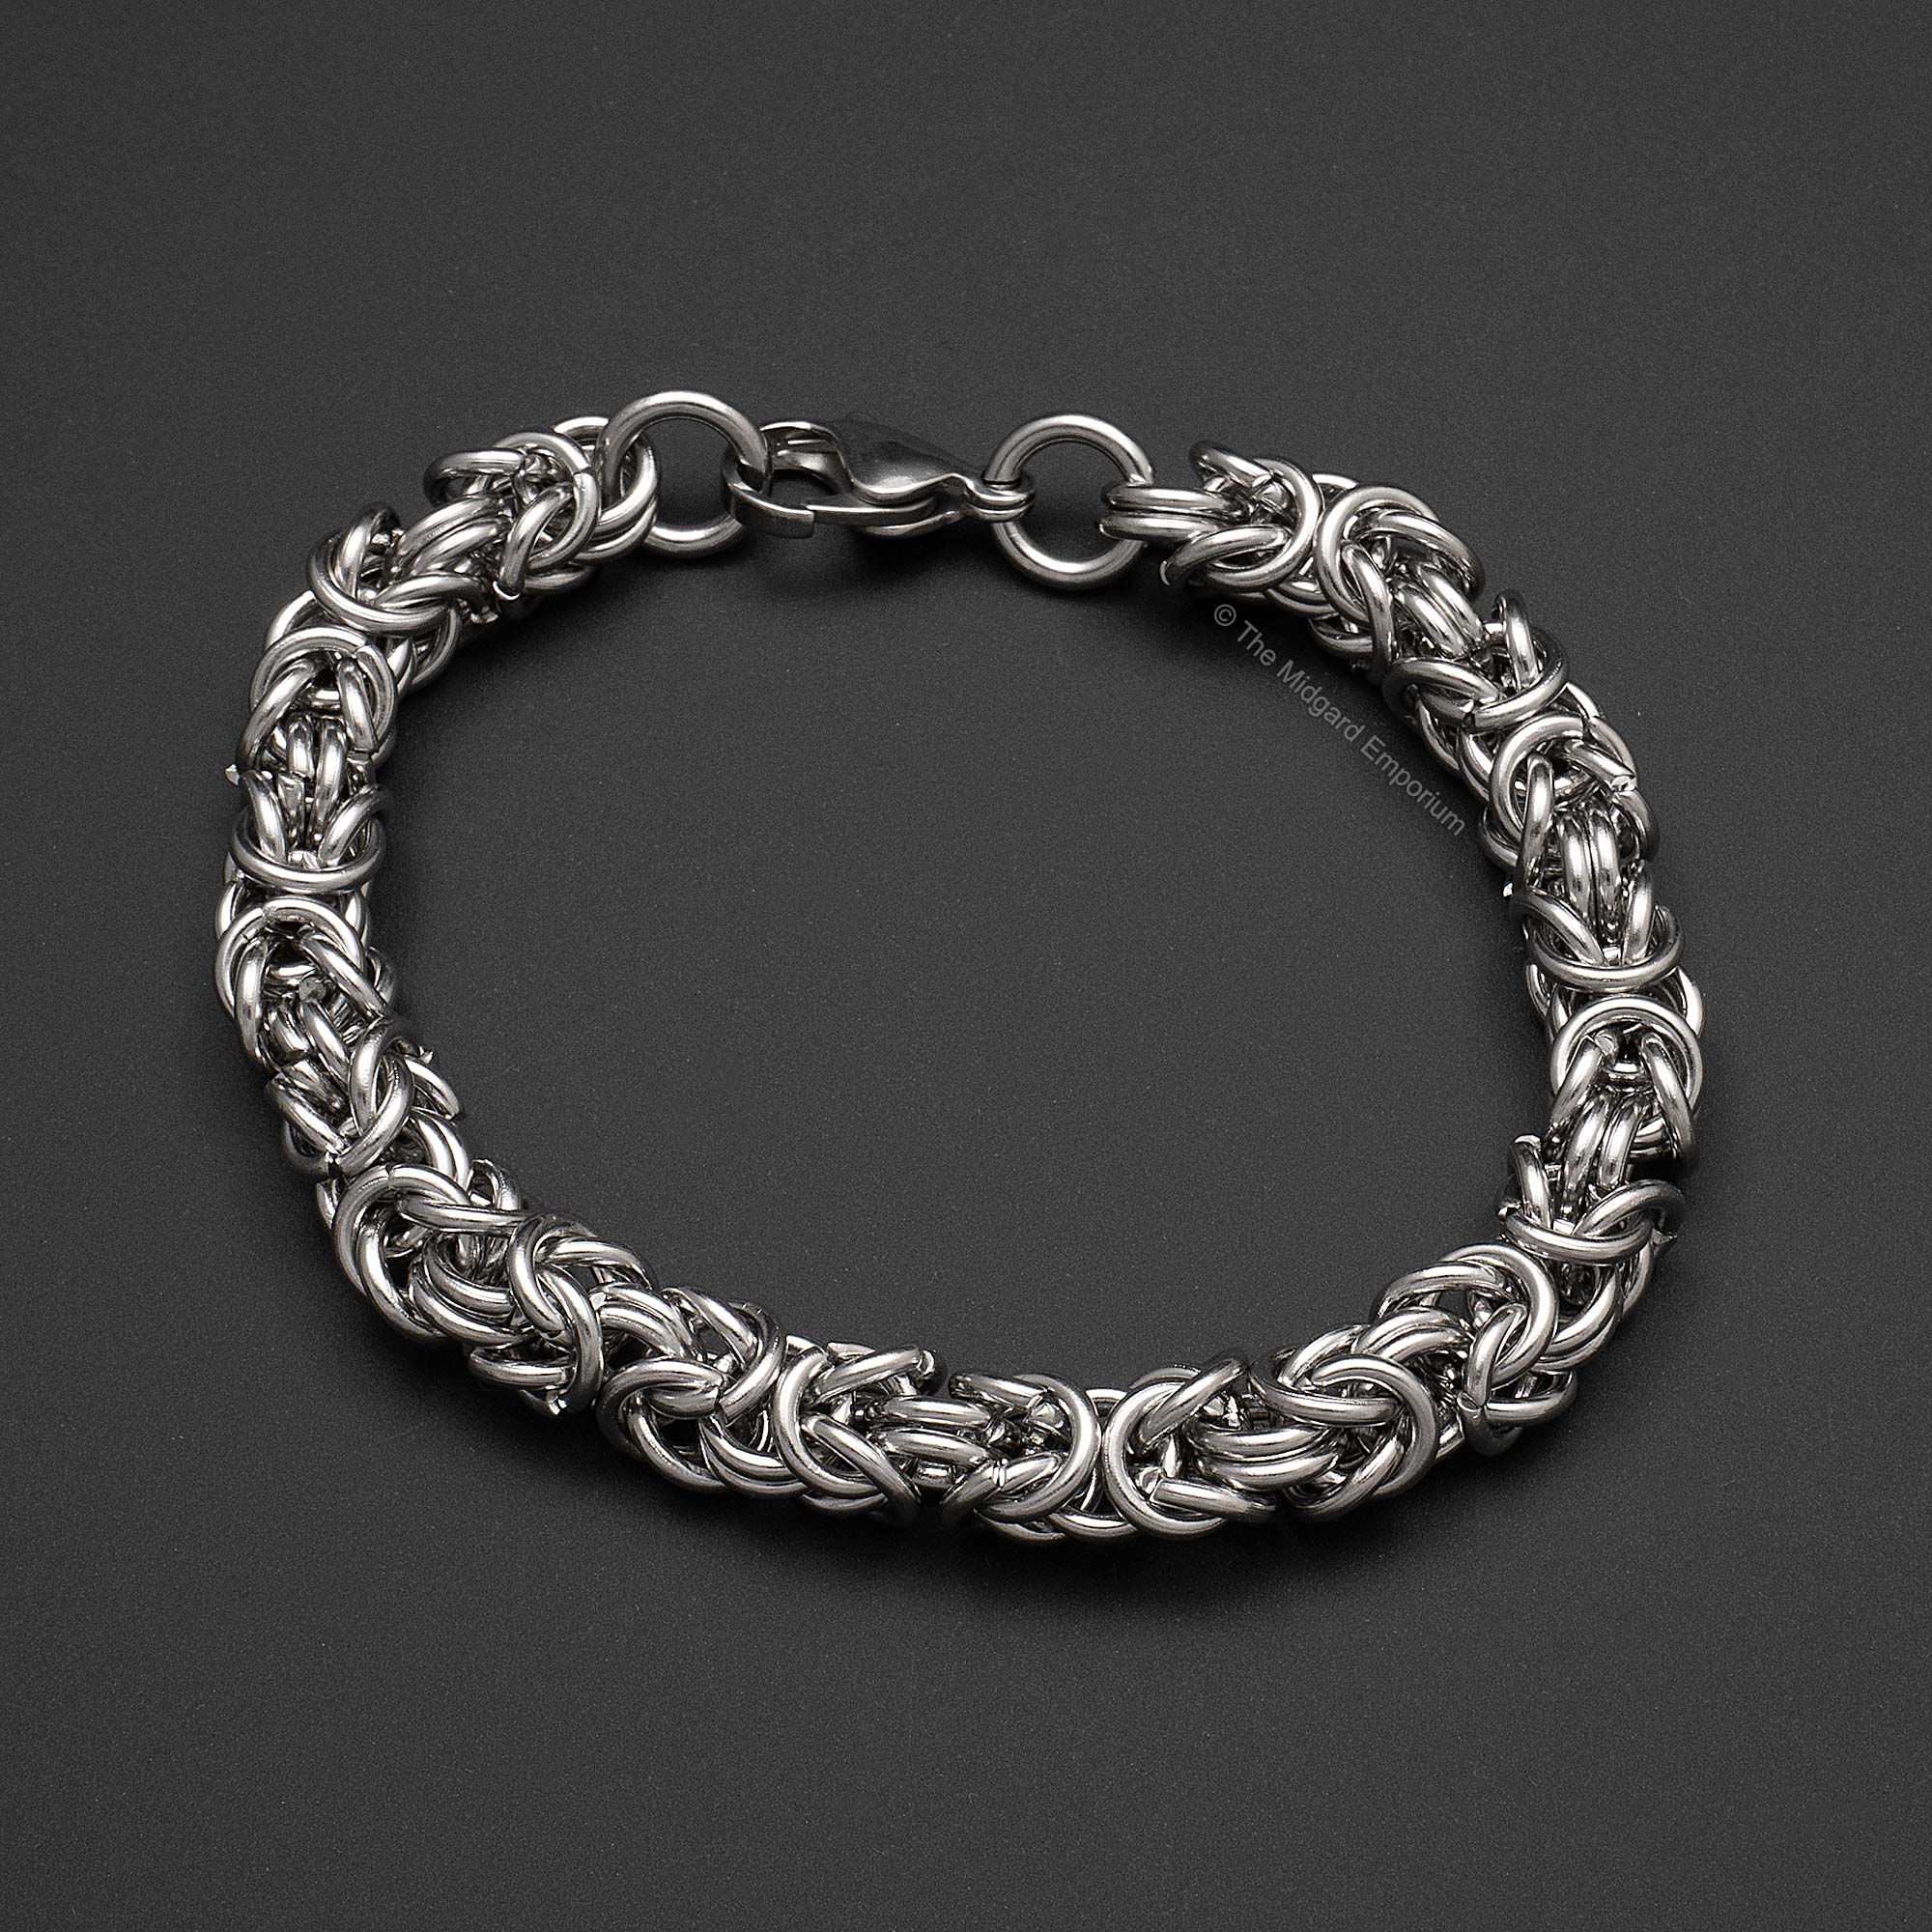 8mm Stainless Steel Byzantine King Chain Bracelet